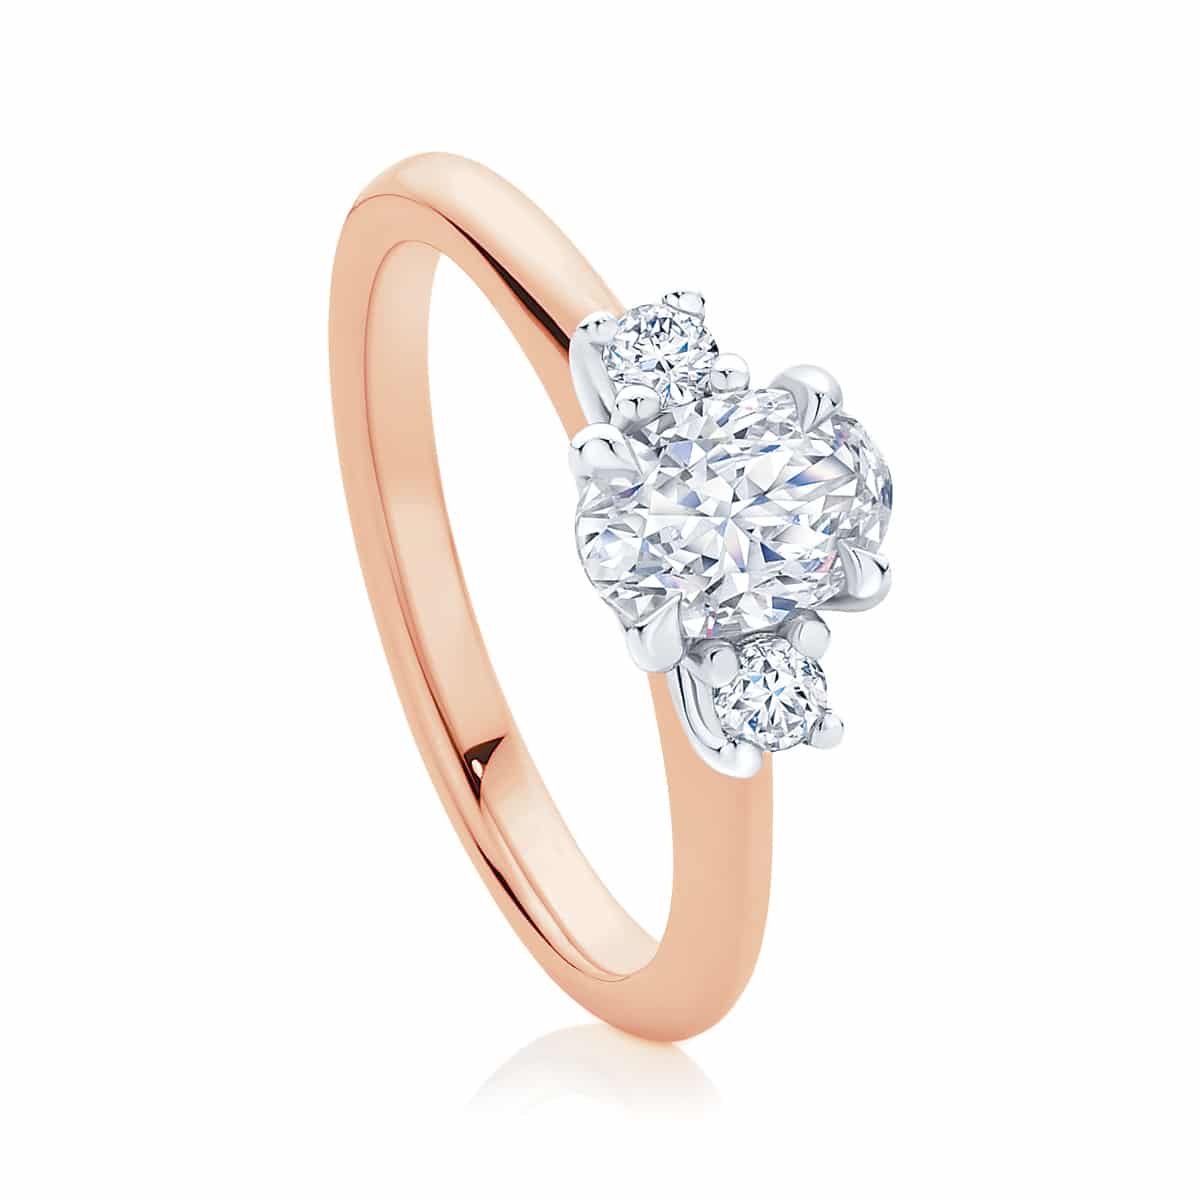 Trending beautiful rose gold stone ring